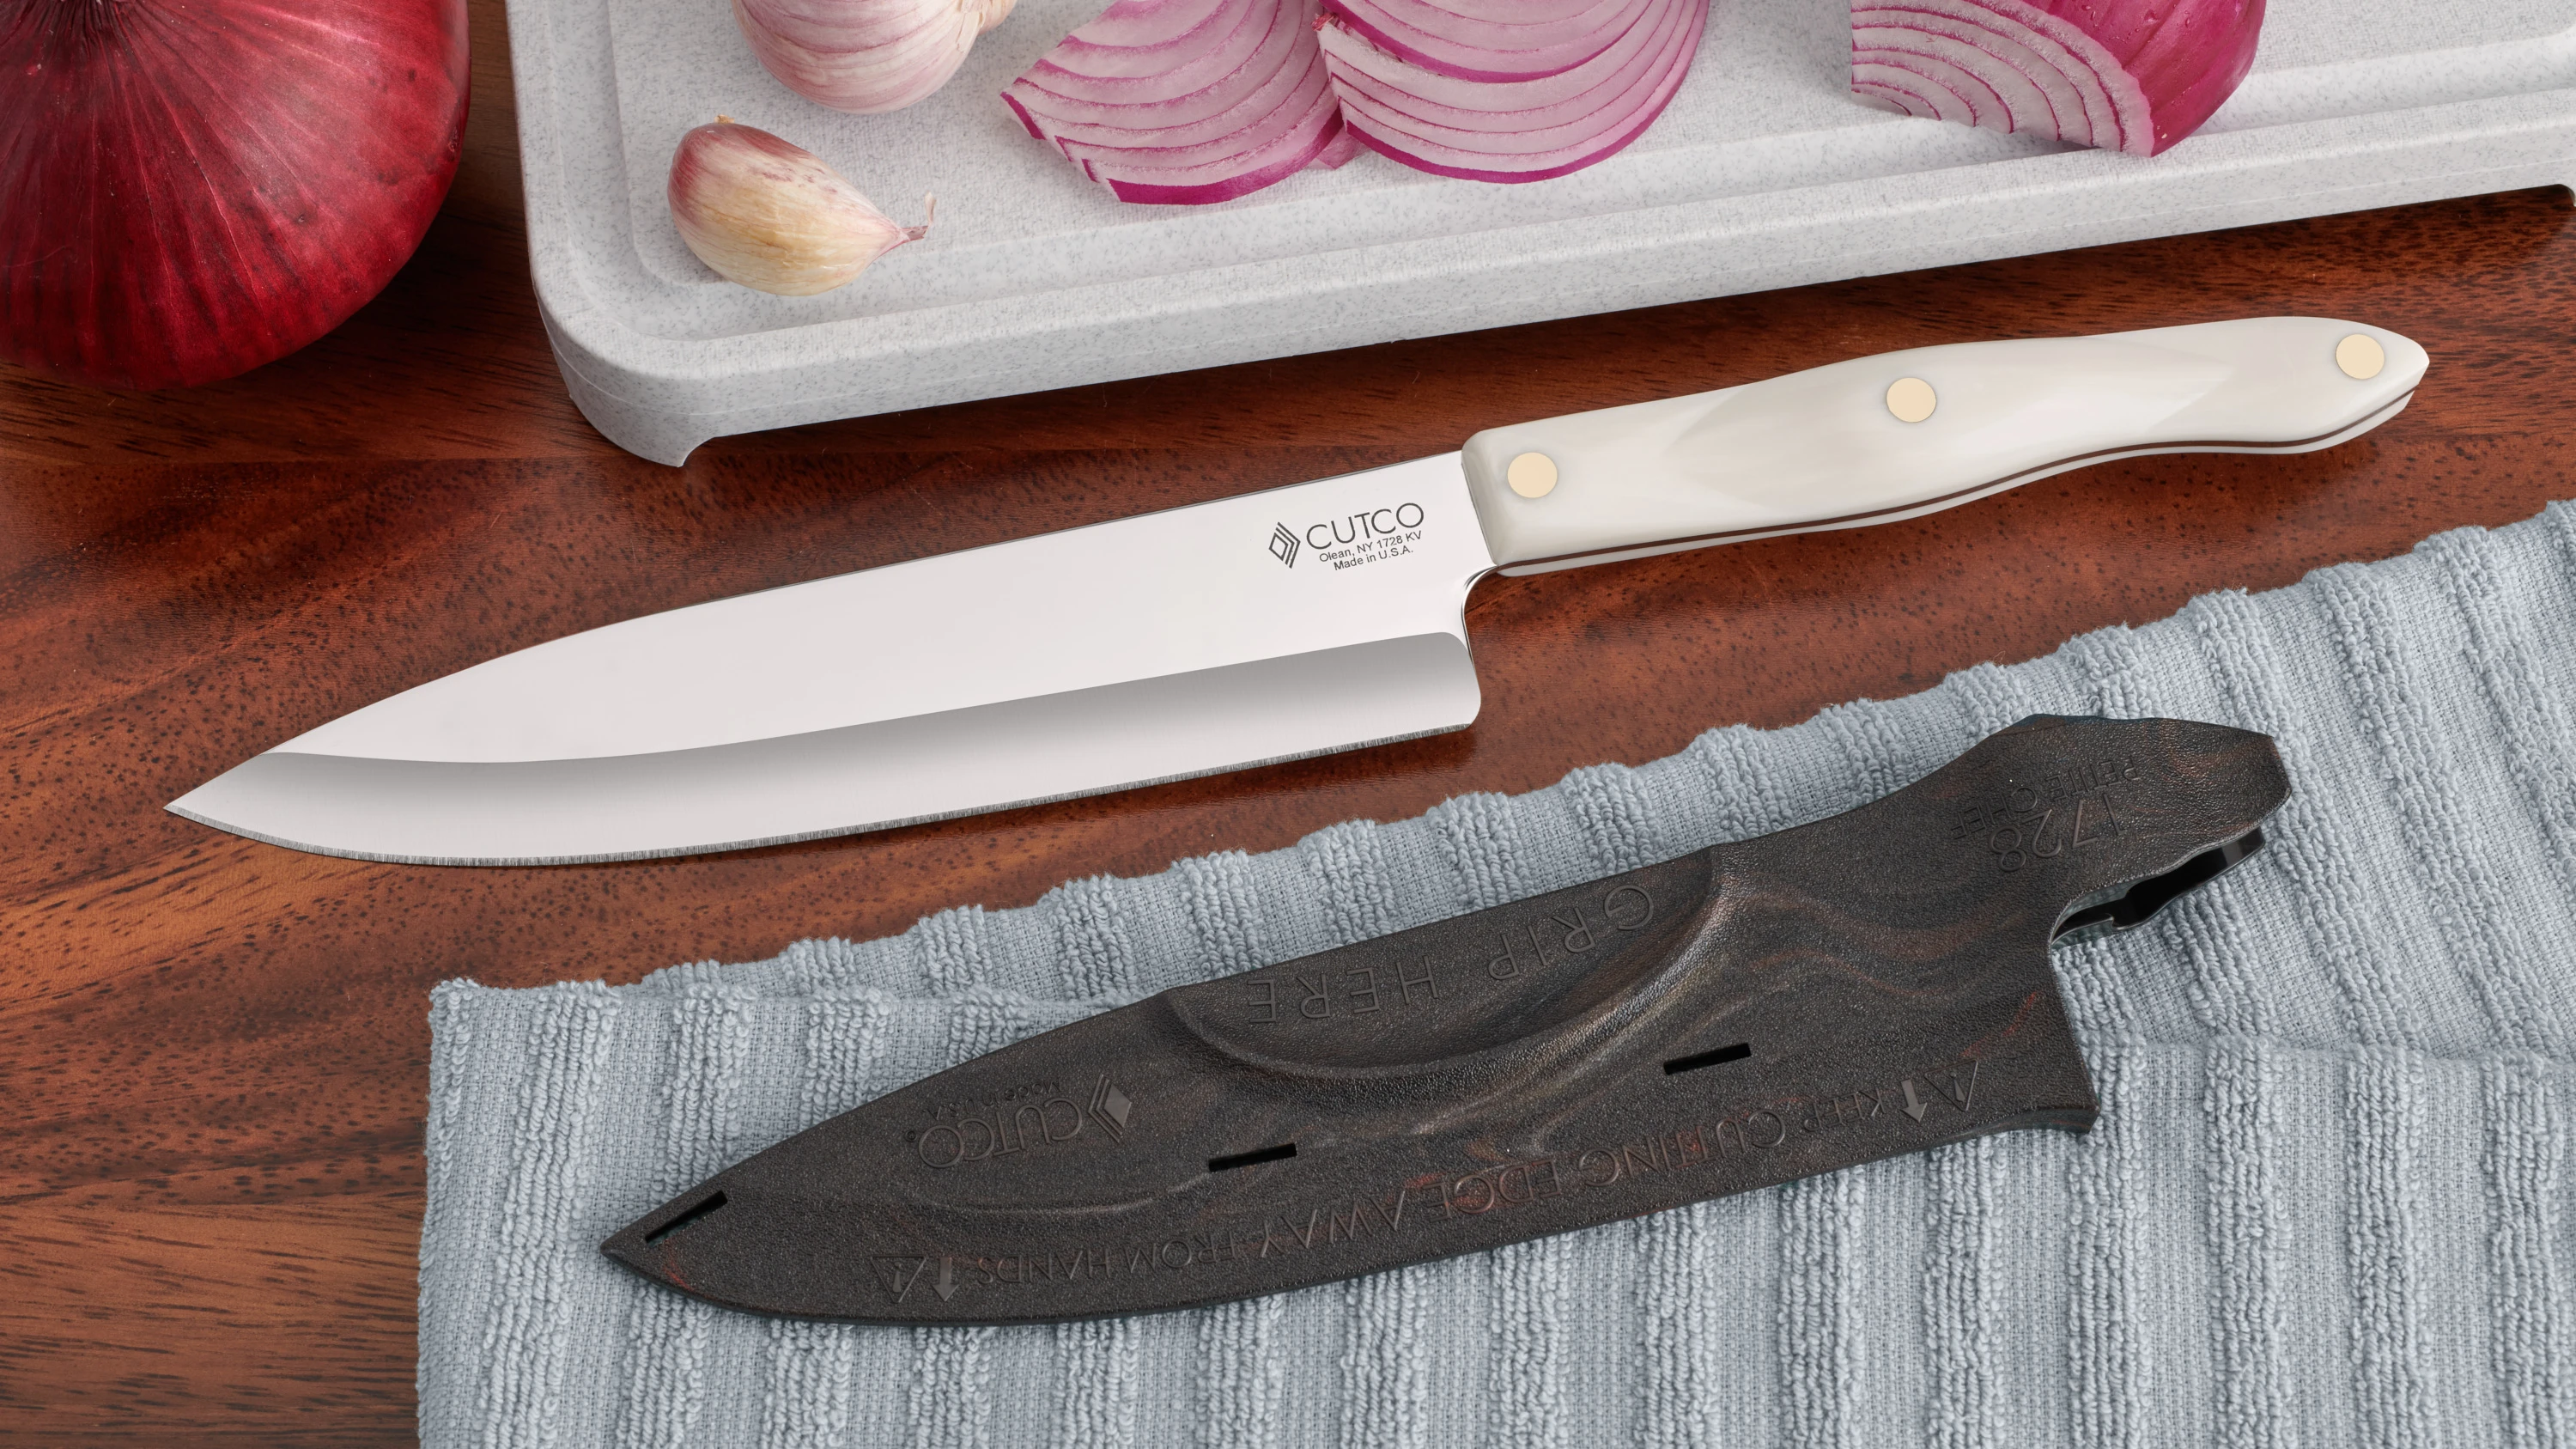 Why As a Chef, I'll Never Buy A Cutco Knife Set